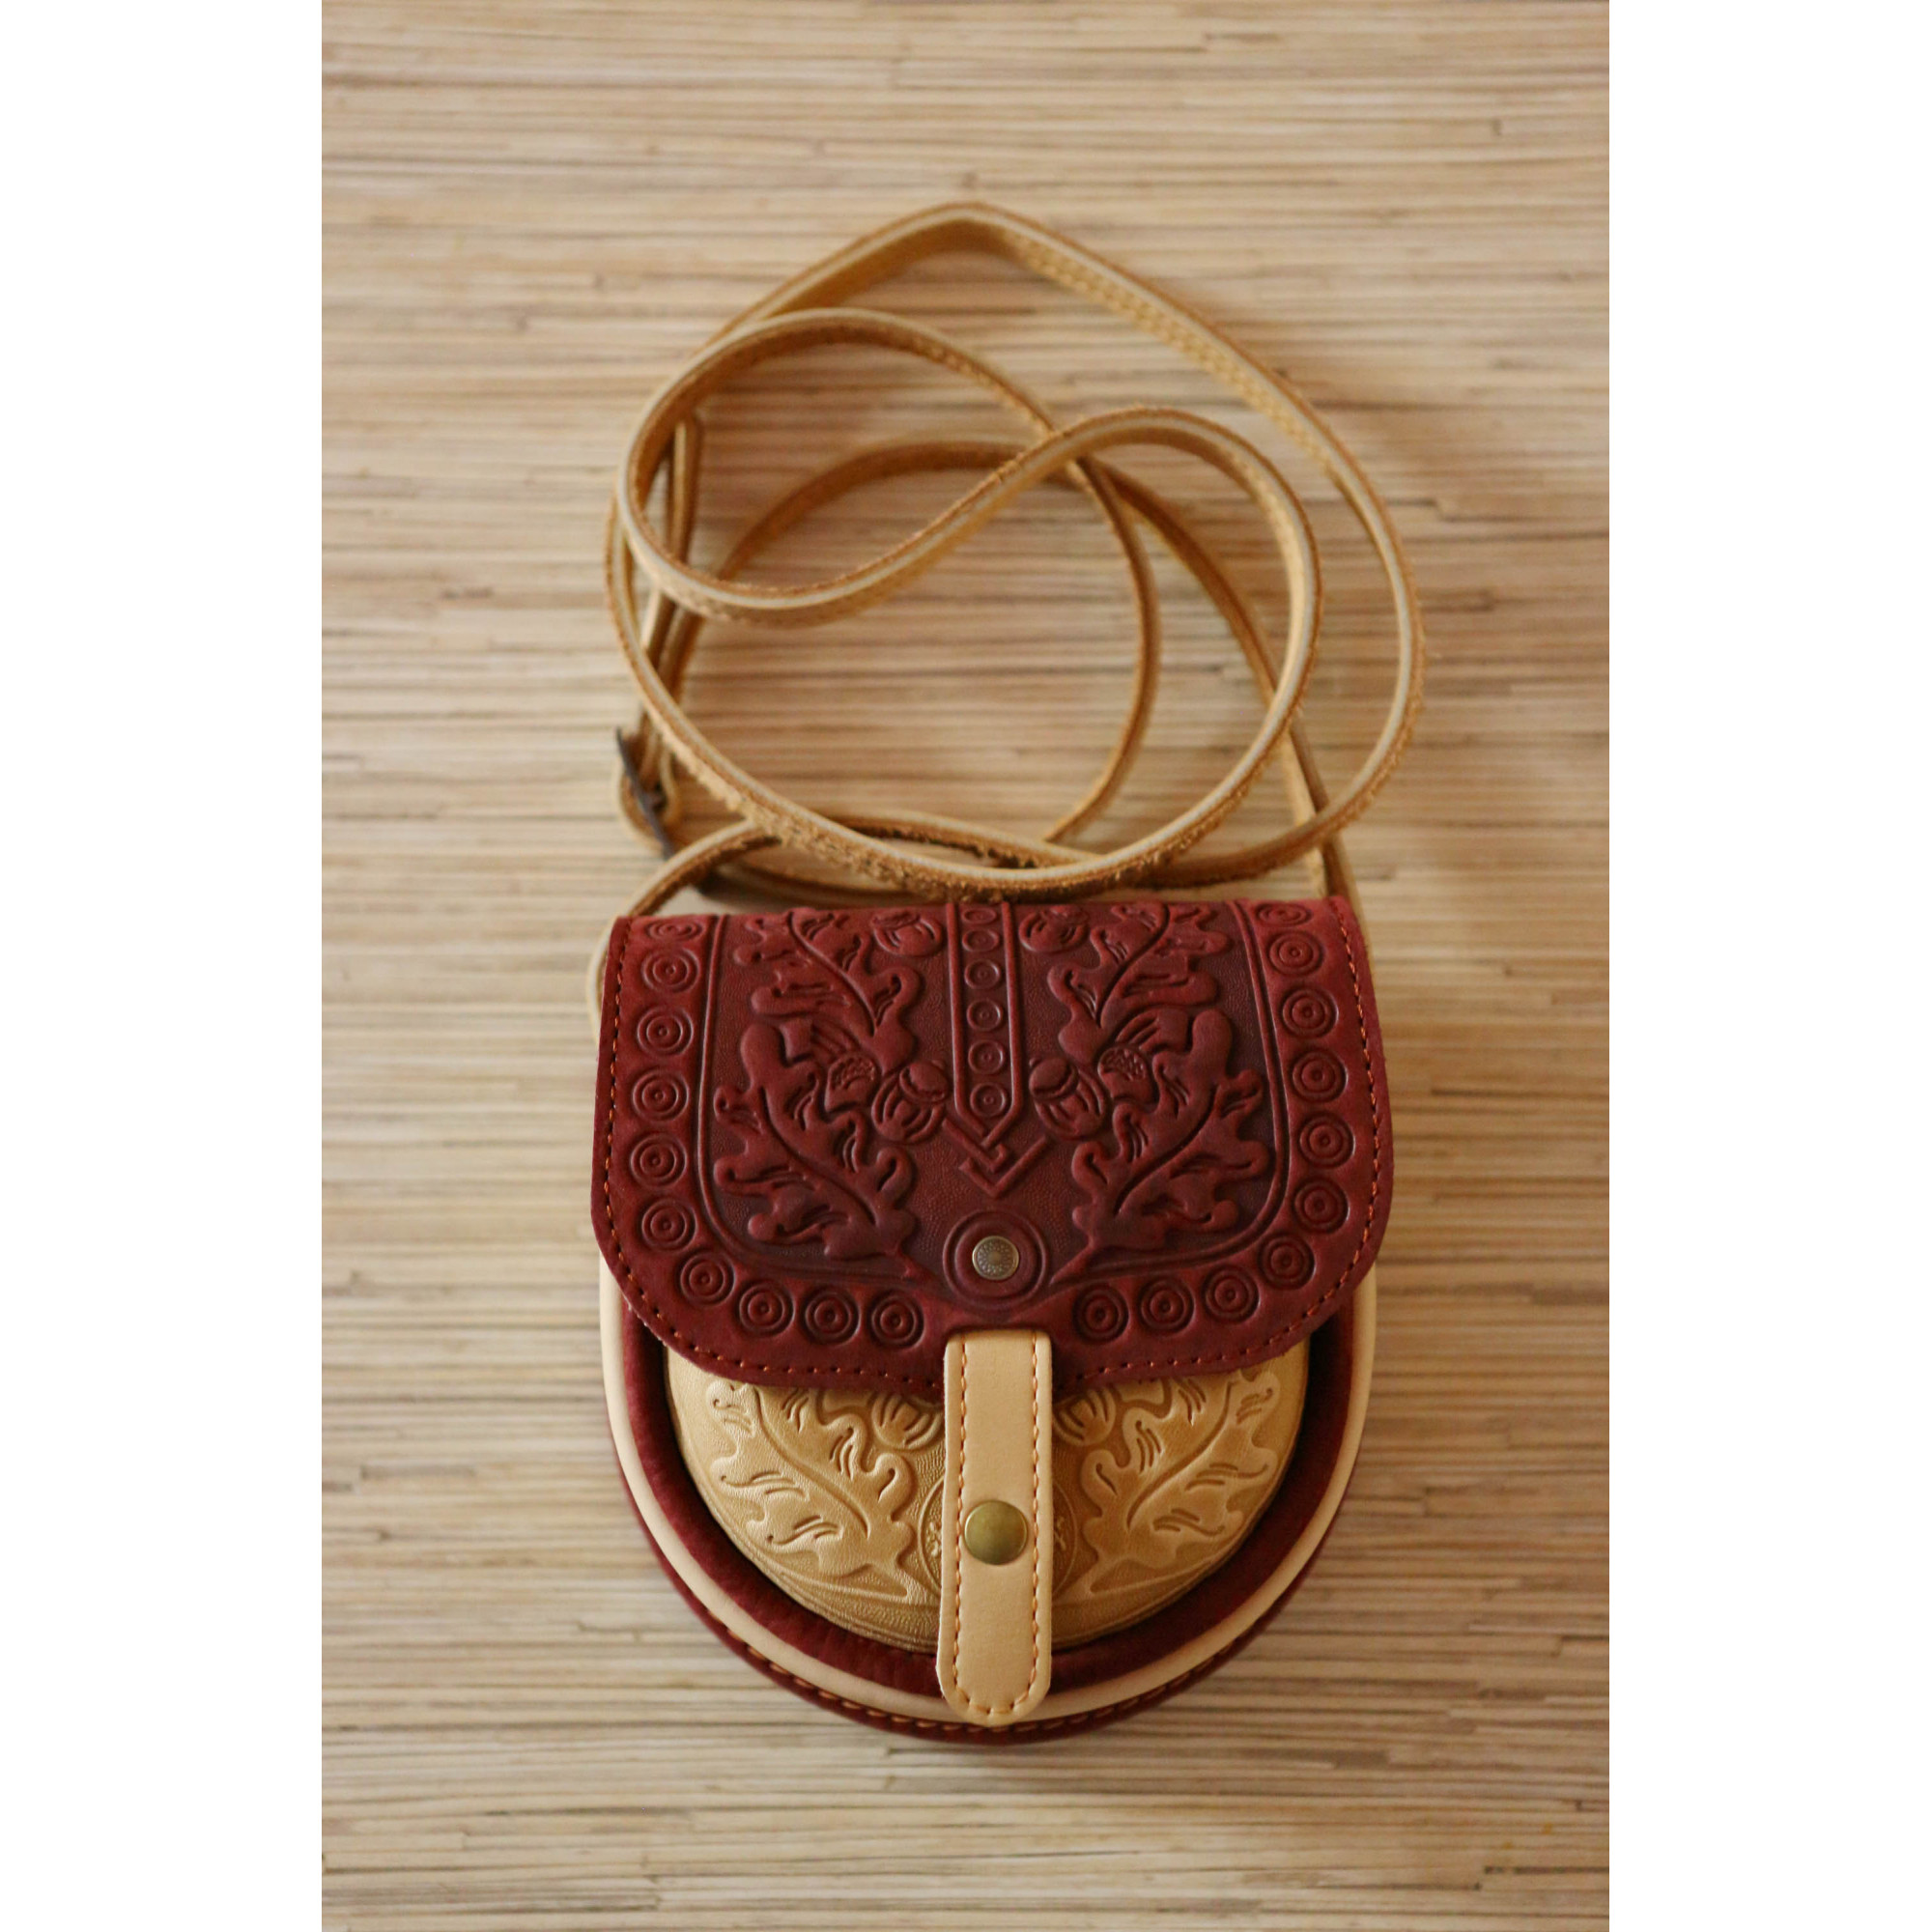 Small Bag Folk Print Beige Cognac Leather Bag